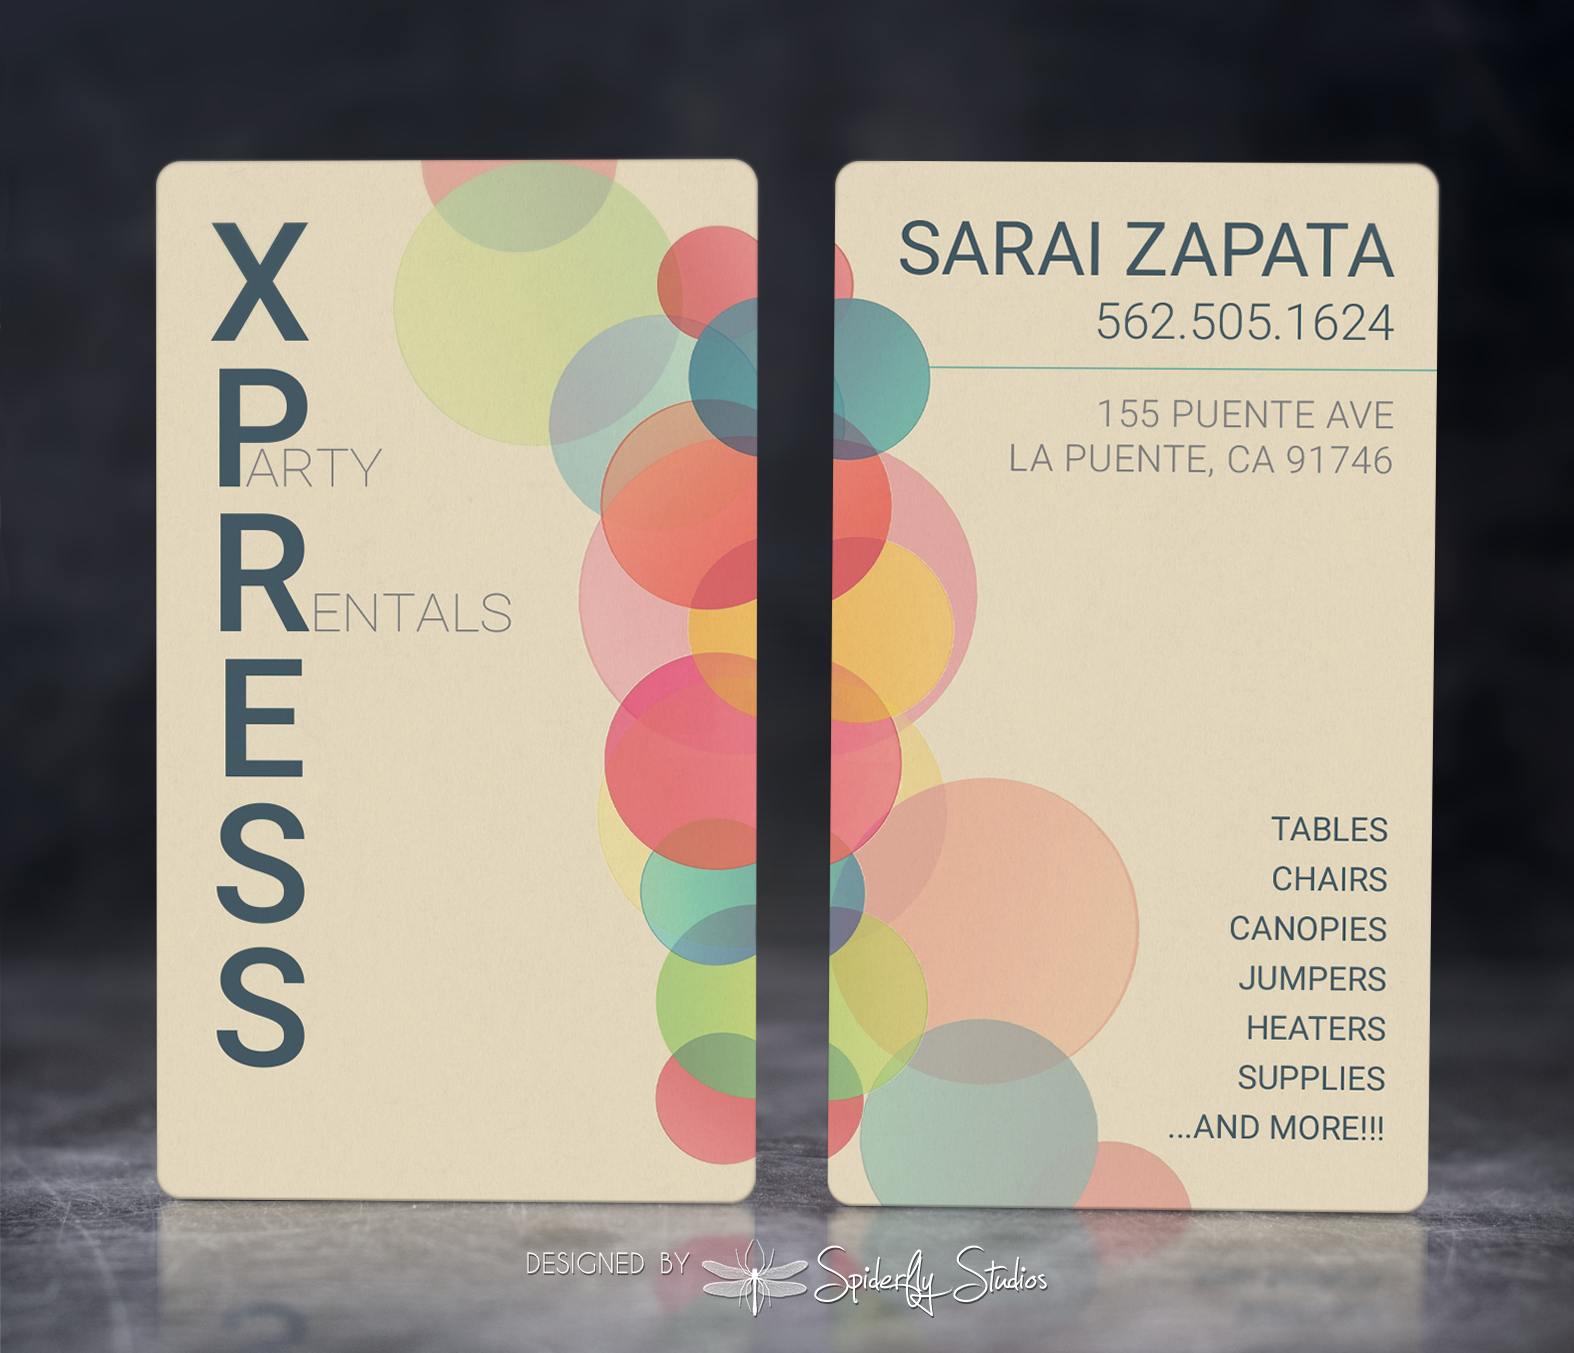 Xpress Party Rentals - Business Card Design